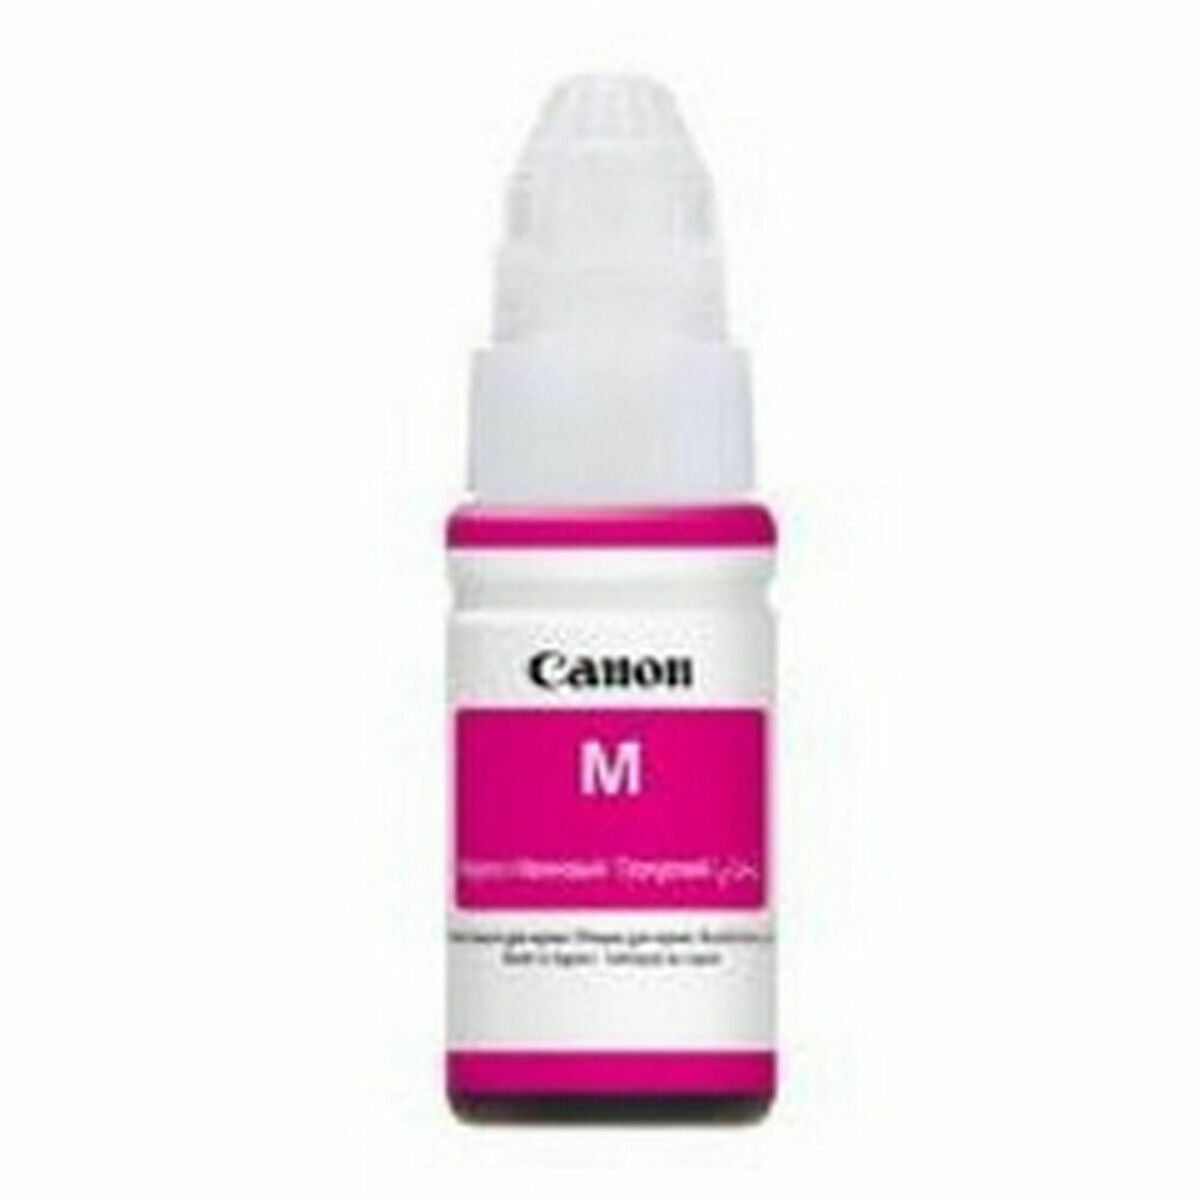 Ink for cartridge refills Canon 1605C001 Magenta